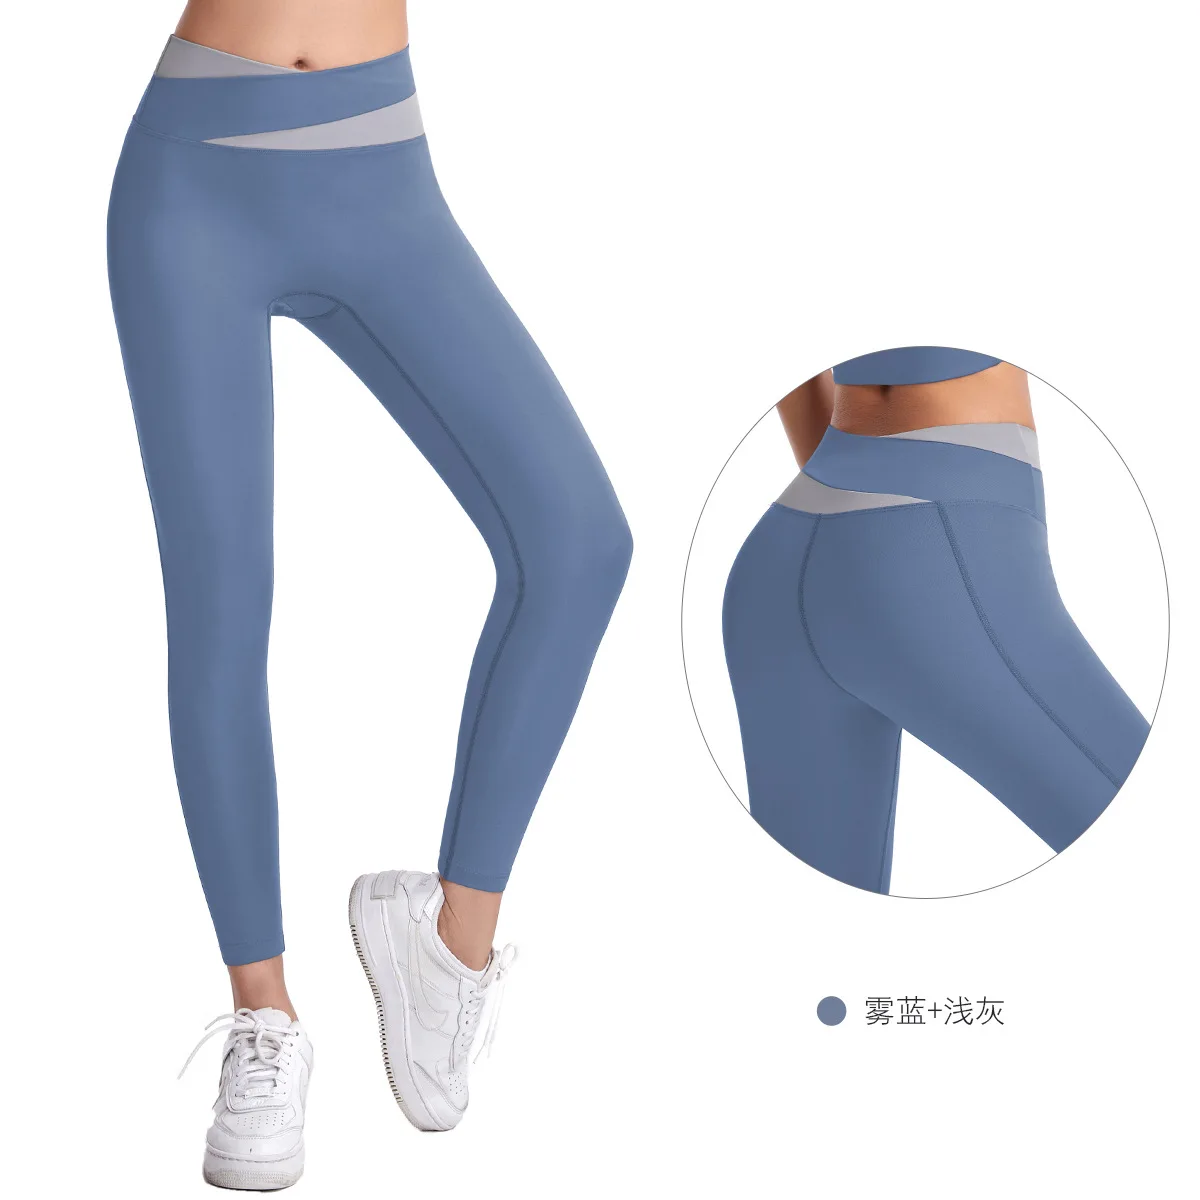 LuLu Yoga trousers Nylon Sportswear woman gym women's quick dry high waist leggings sweaty running fitness sports Pants black images - 6